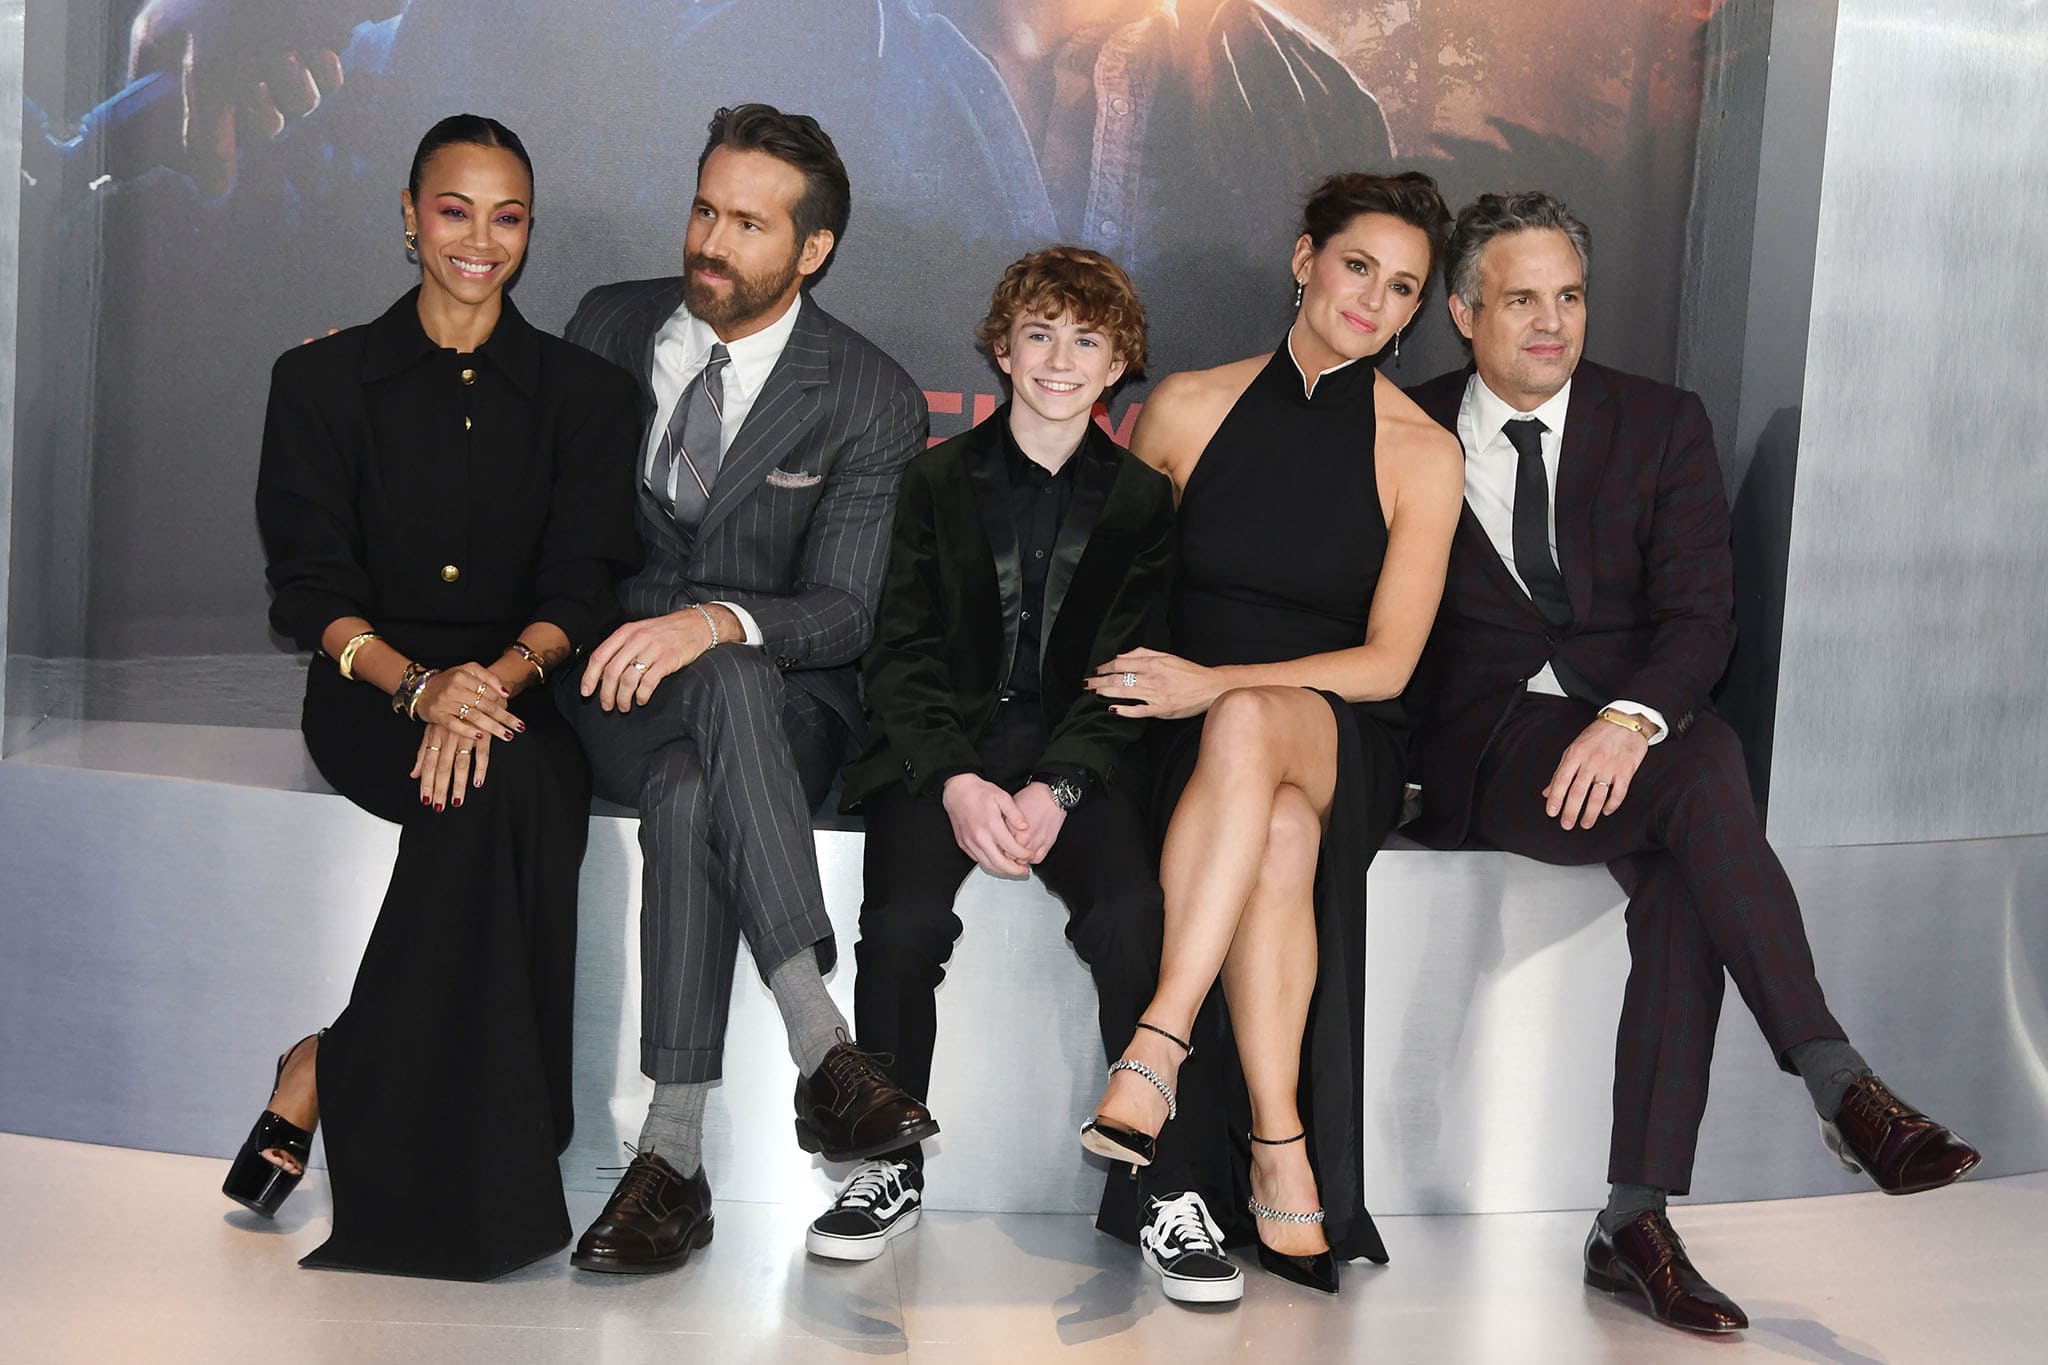 The cast of The Adam Project: Zoe Saldana, Ryan Reynolds, Walker Scobell, Jennifer Garner, and Mark Ruffalo attend The Adam Project World Premiere